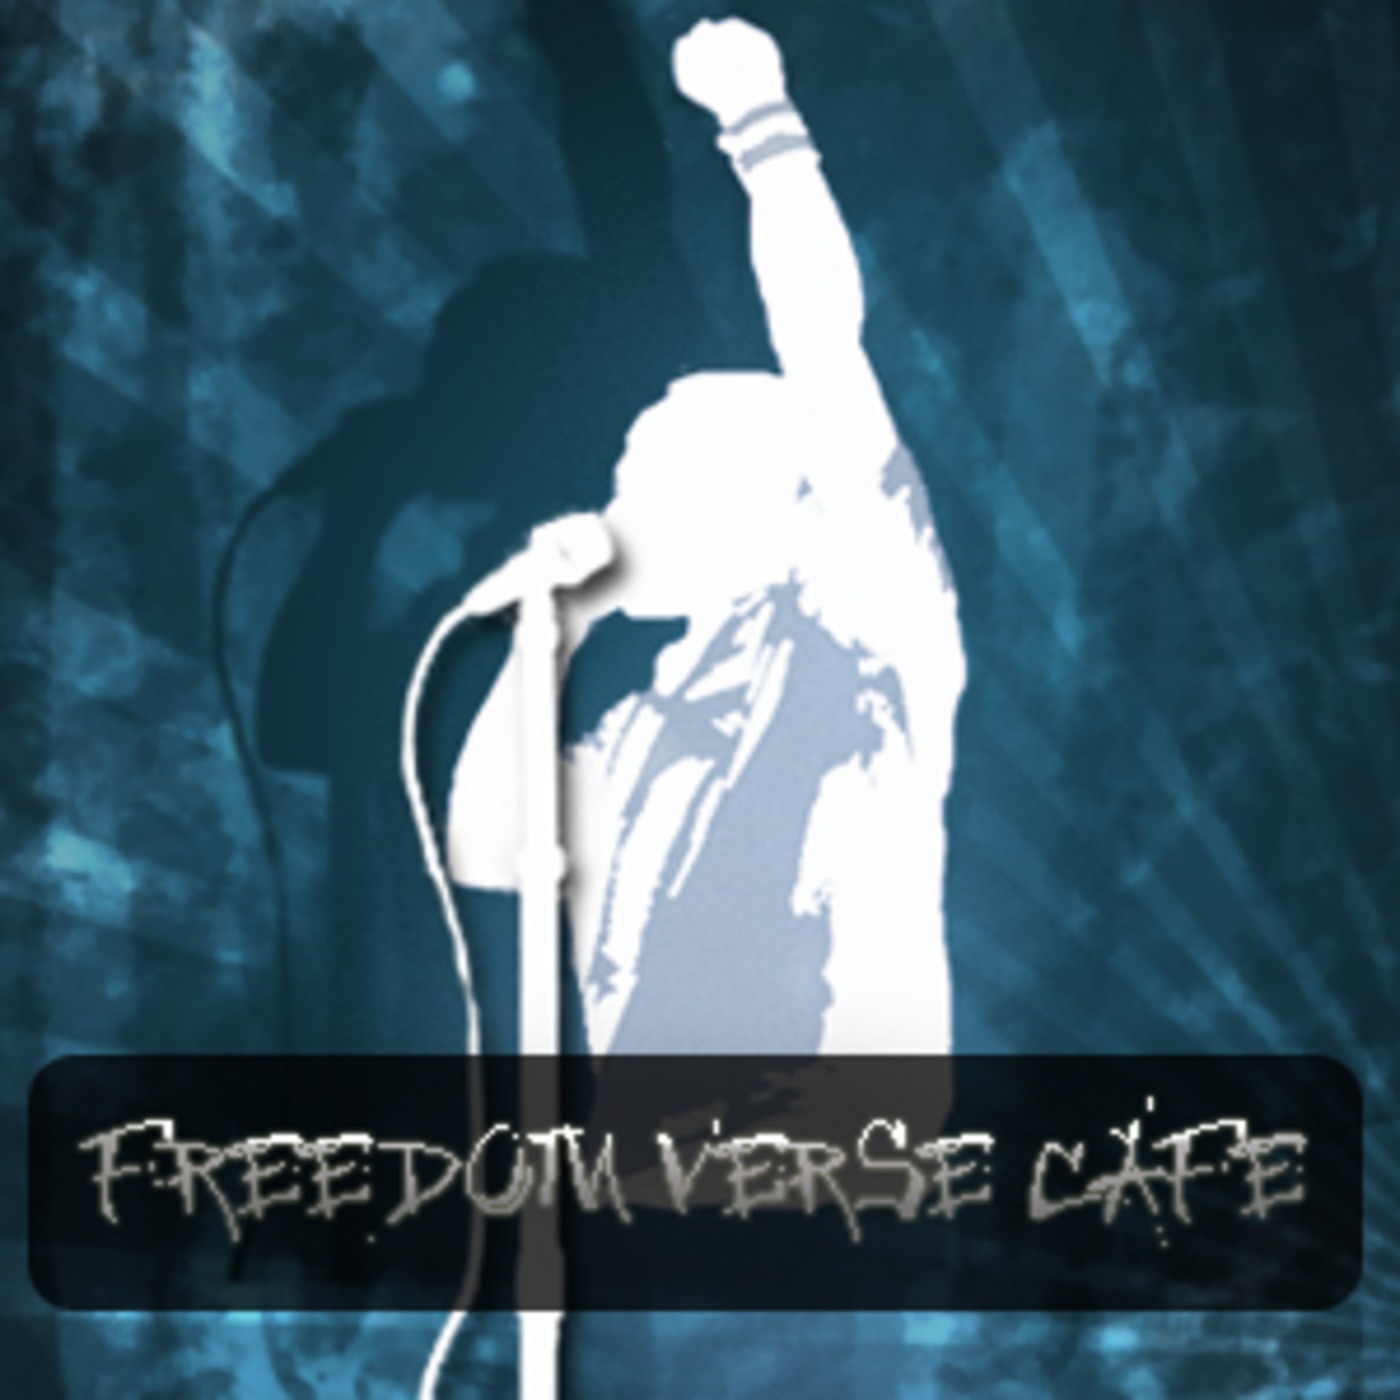 Freedom Verse Café Mixtape Edition